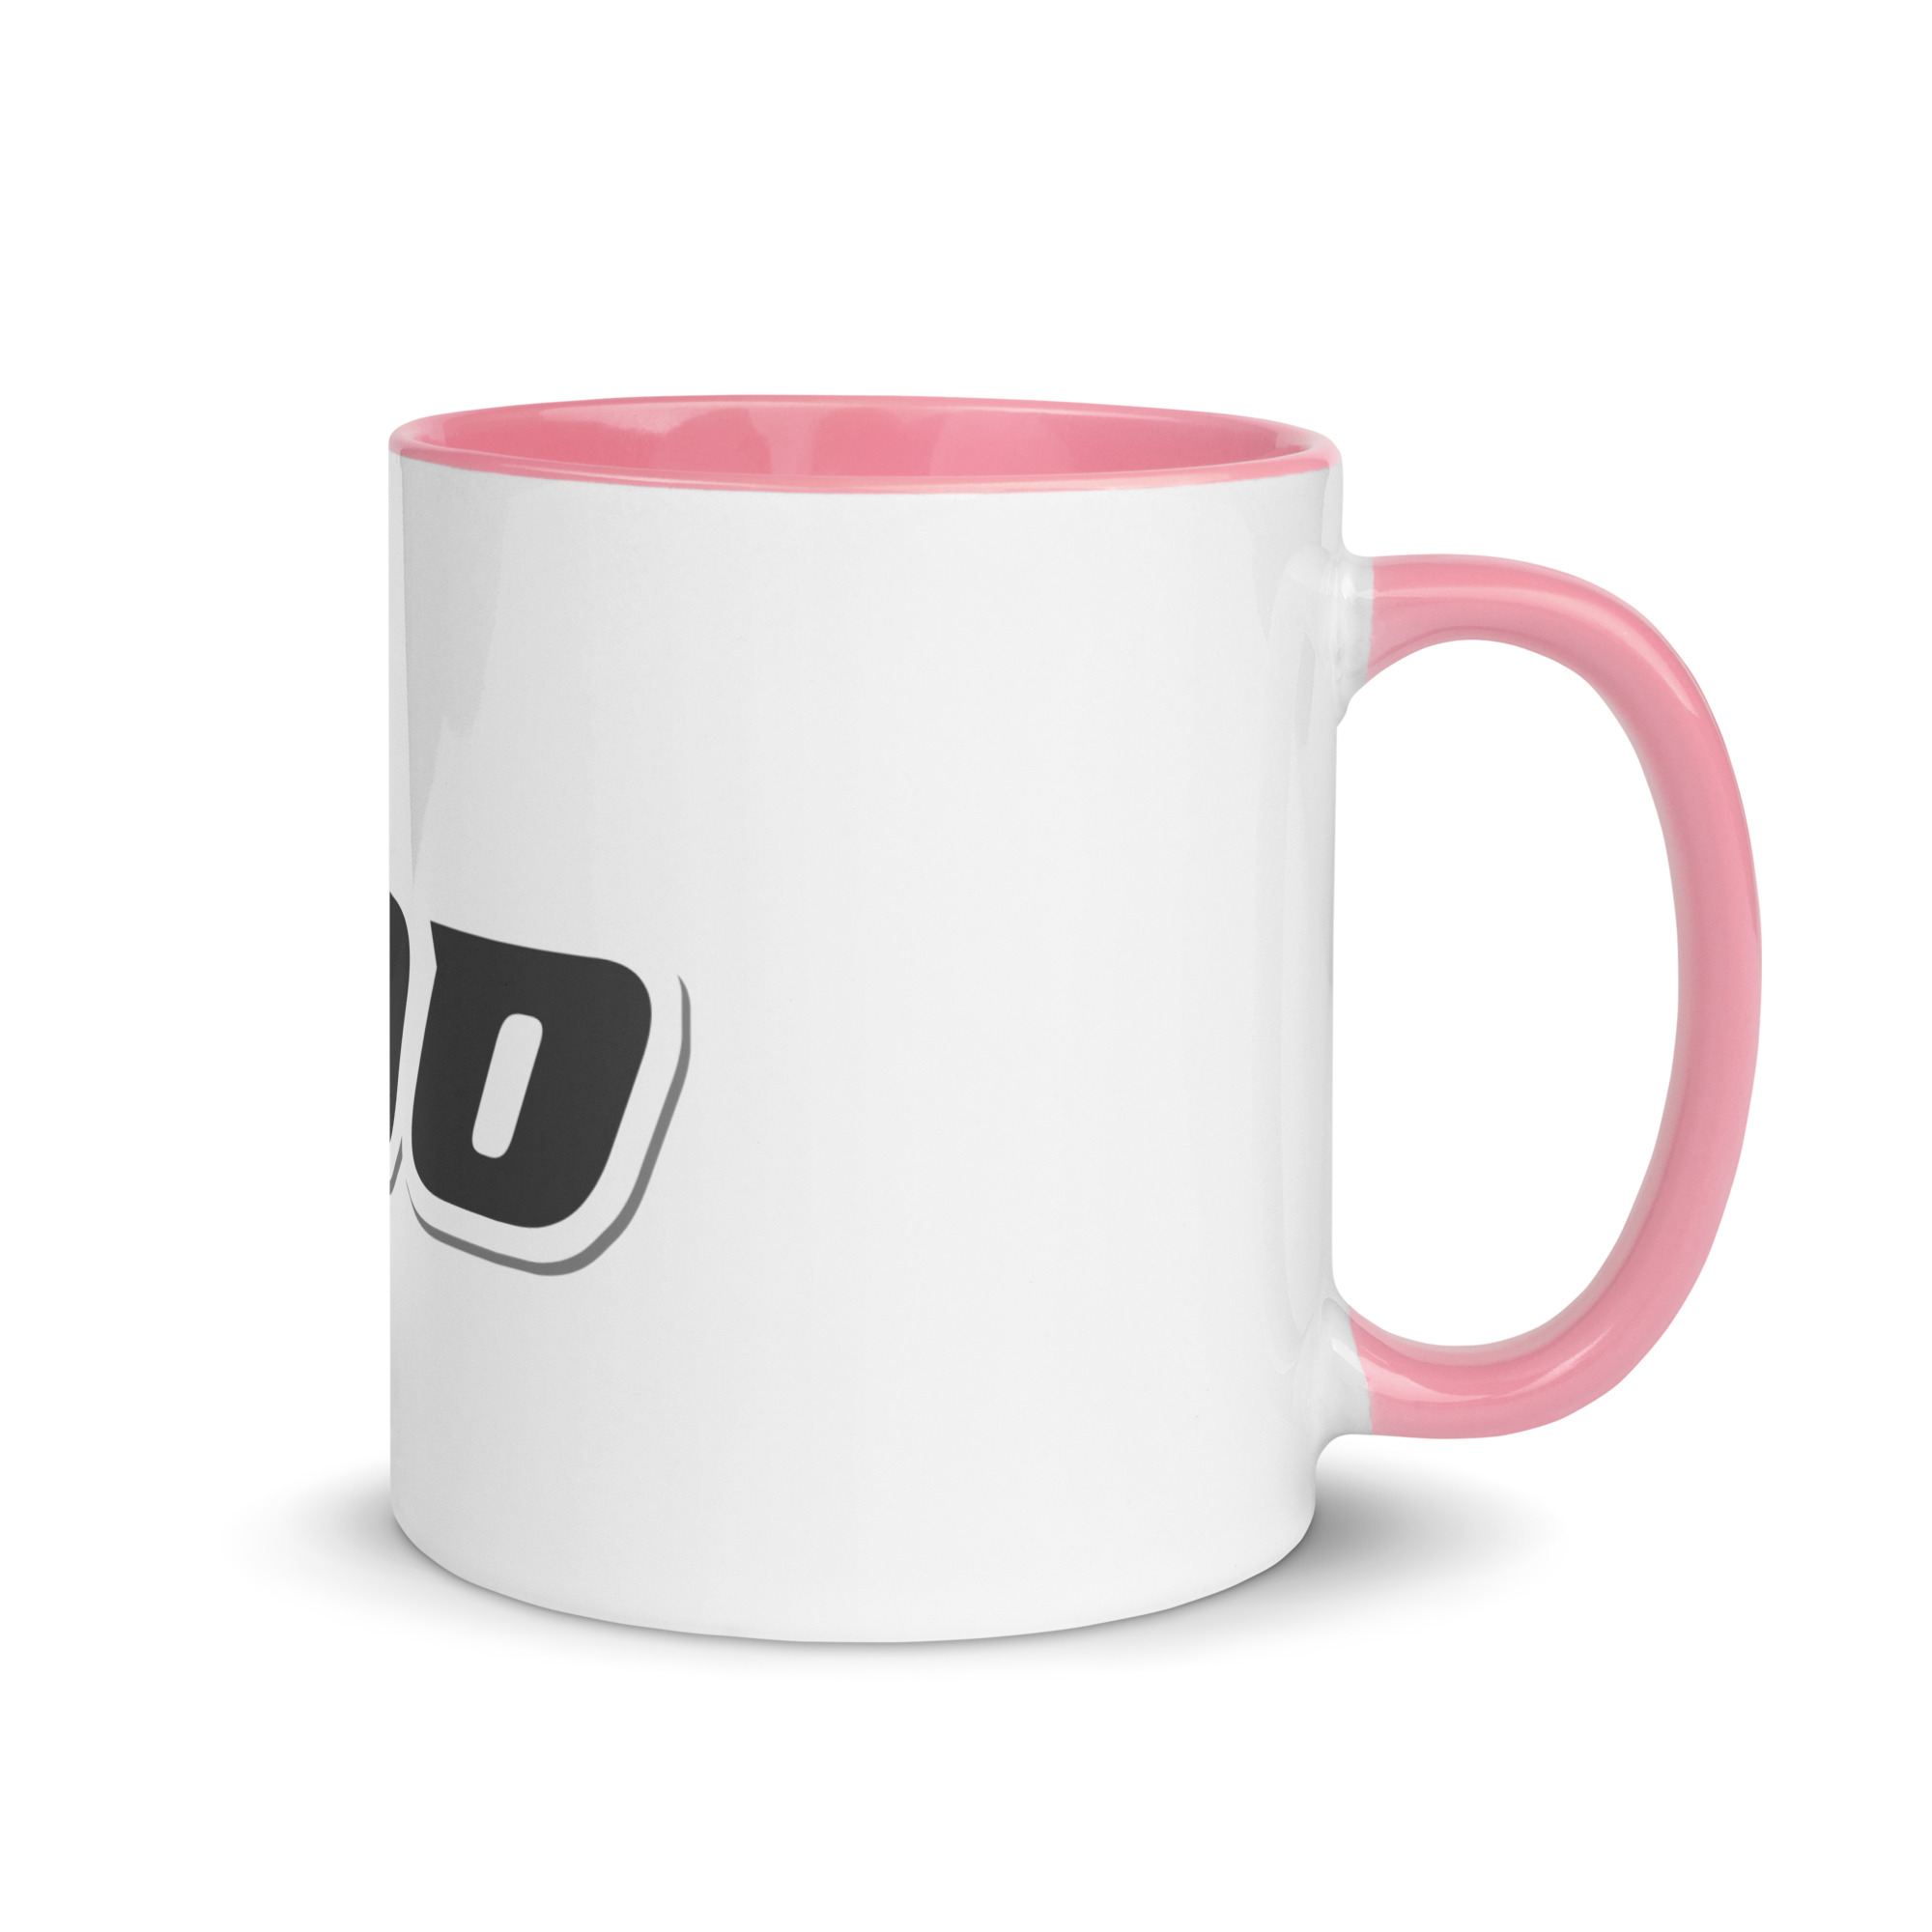 white-ceramic-mug-with-color-inside-pink-11-oz-right-6525b6484c958.jpg